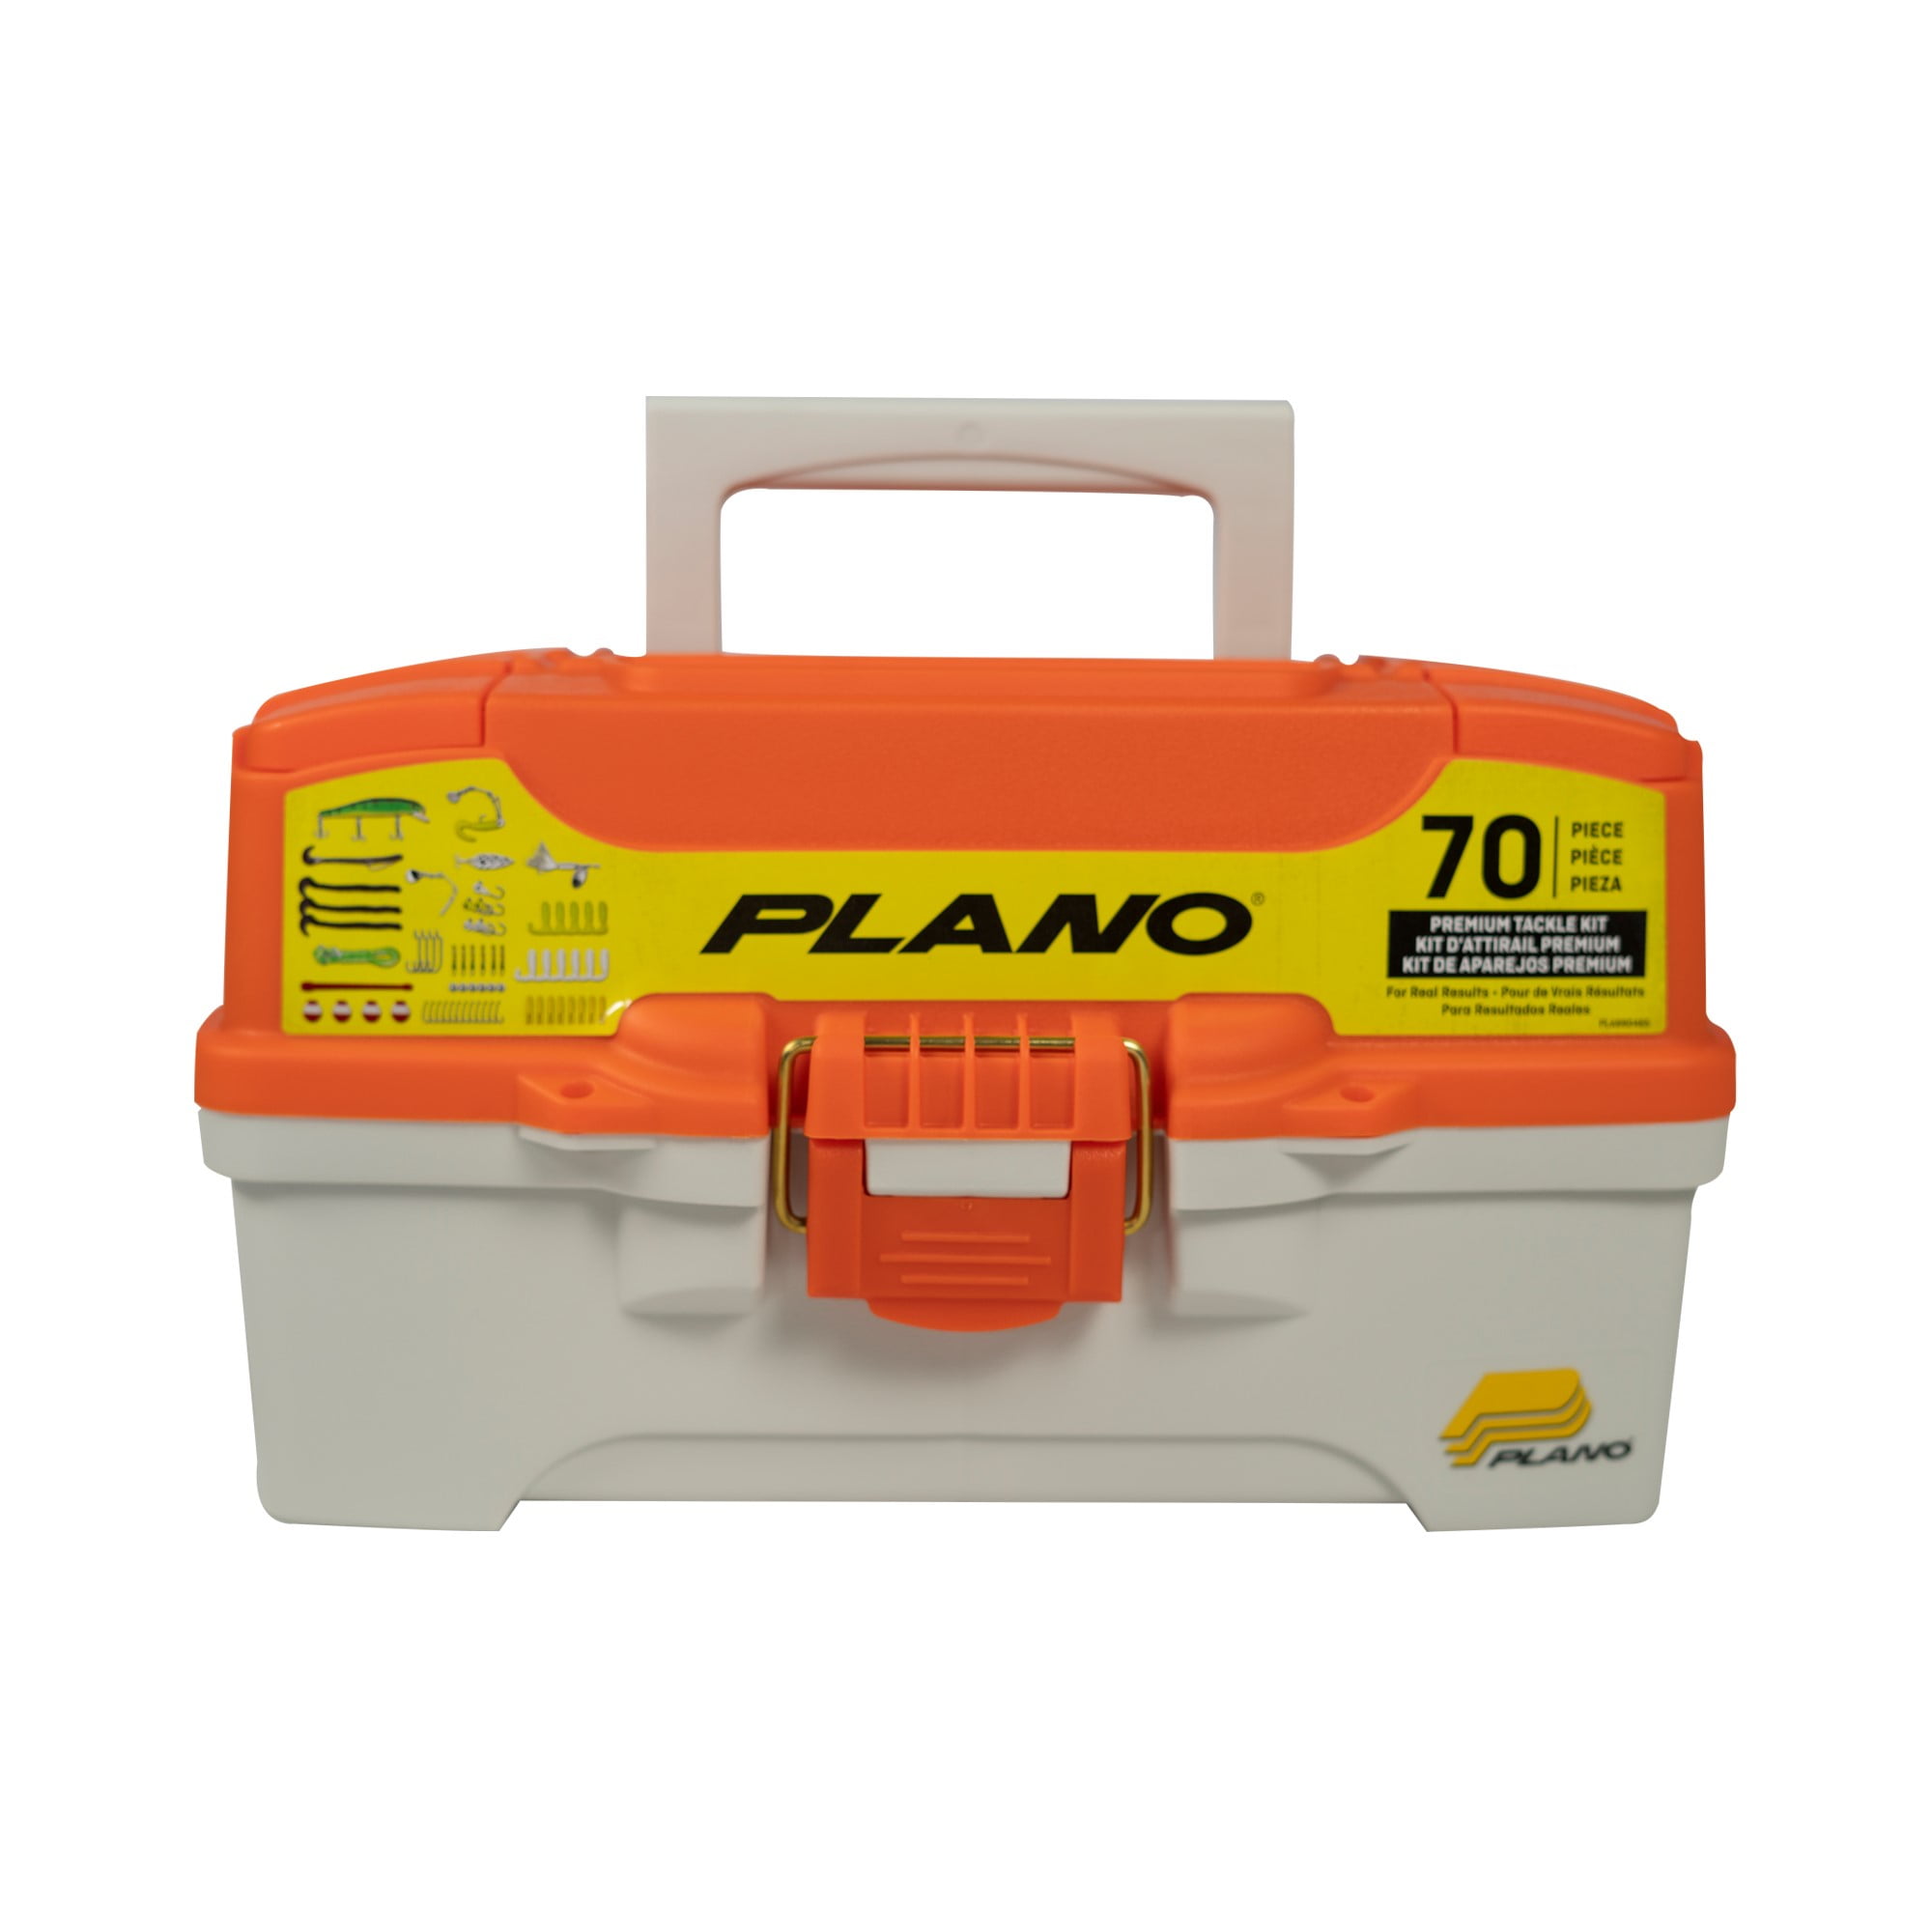  Plano Lets Fish Satchel Tackle Box, Includes 70 Piece